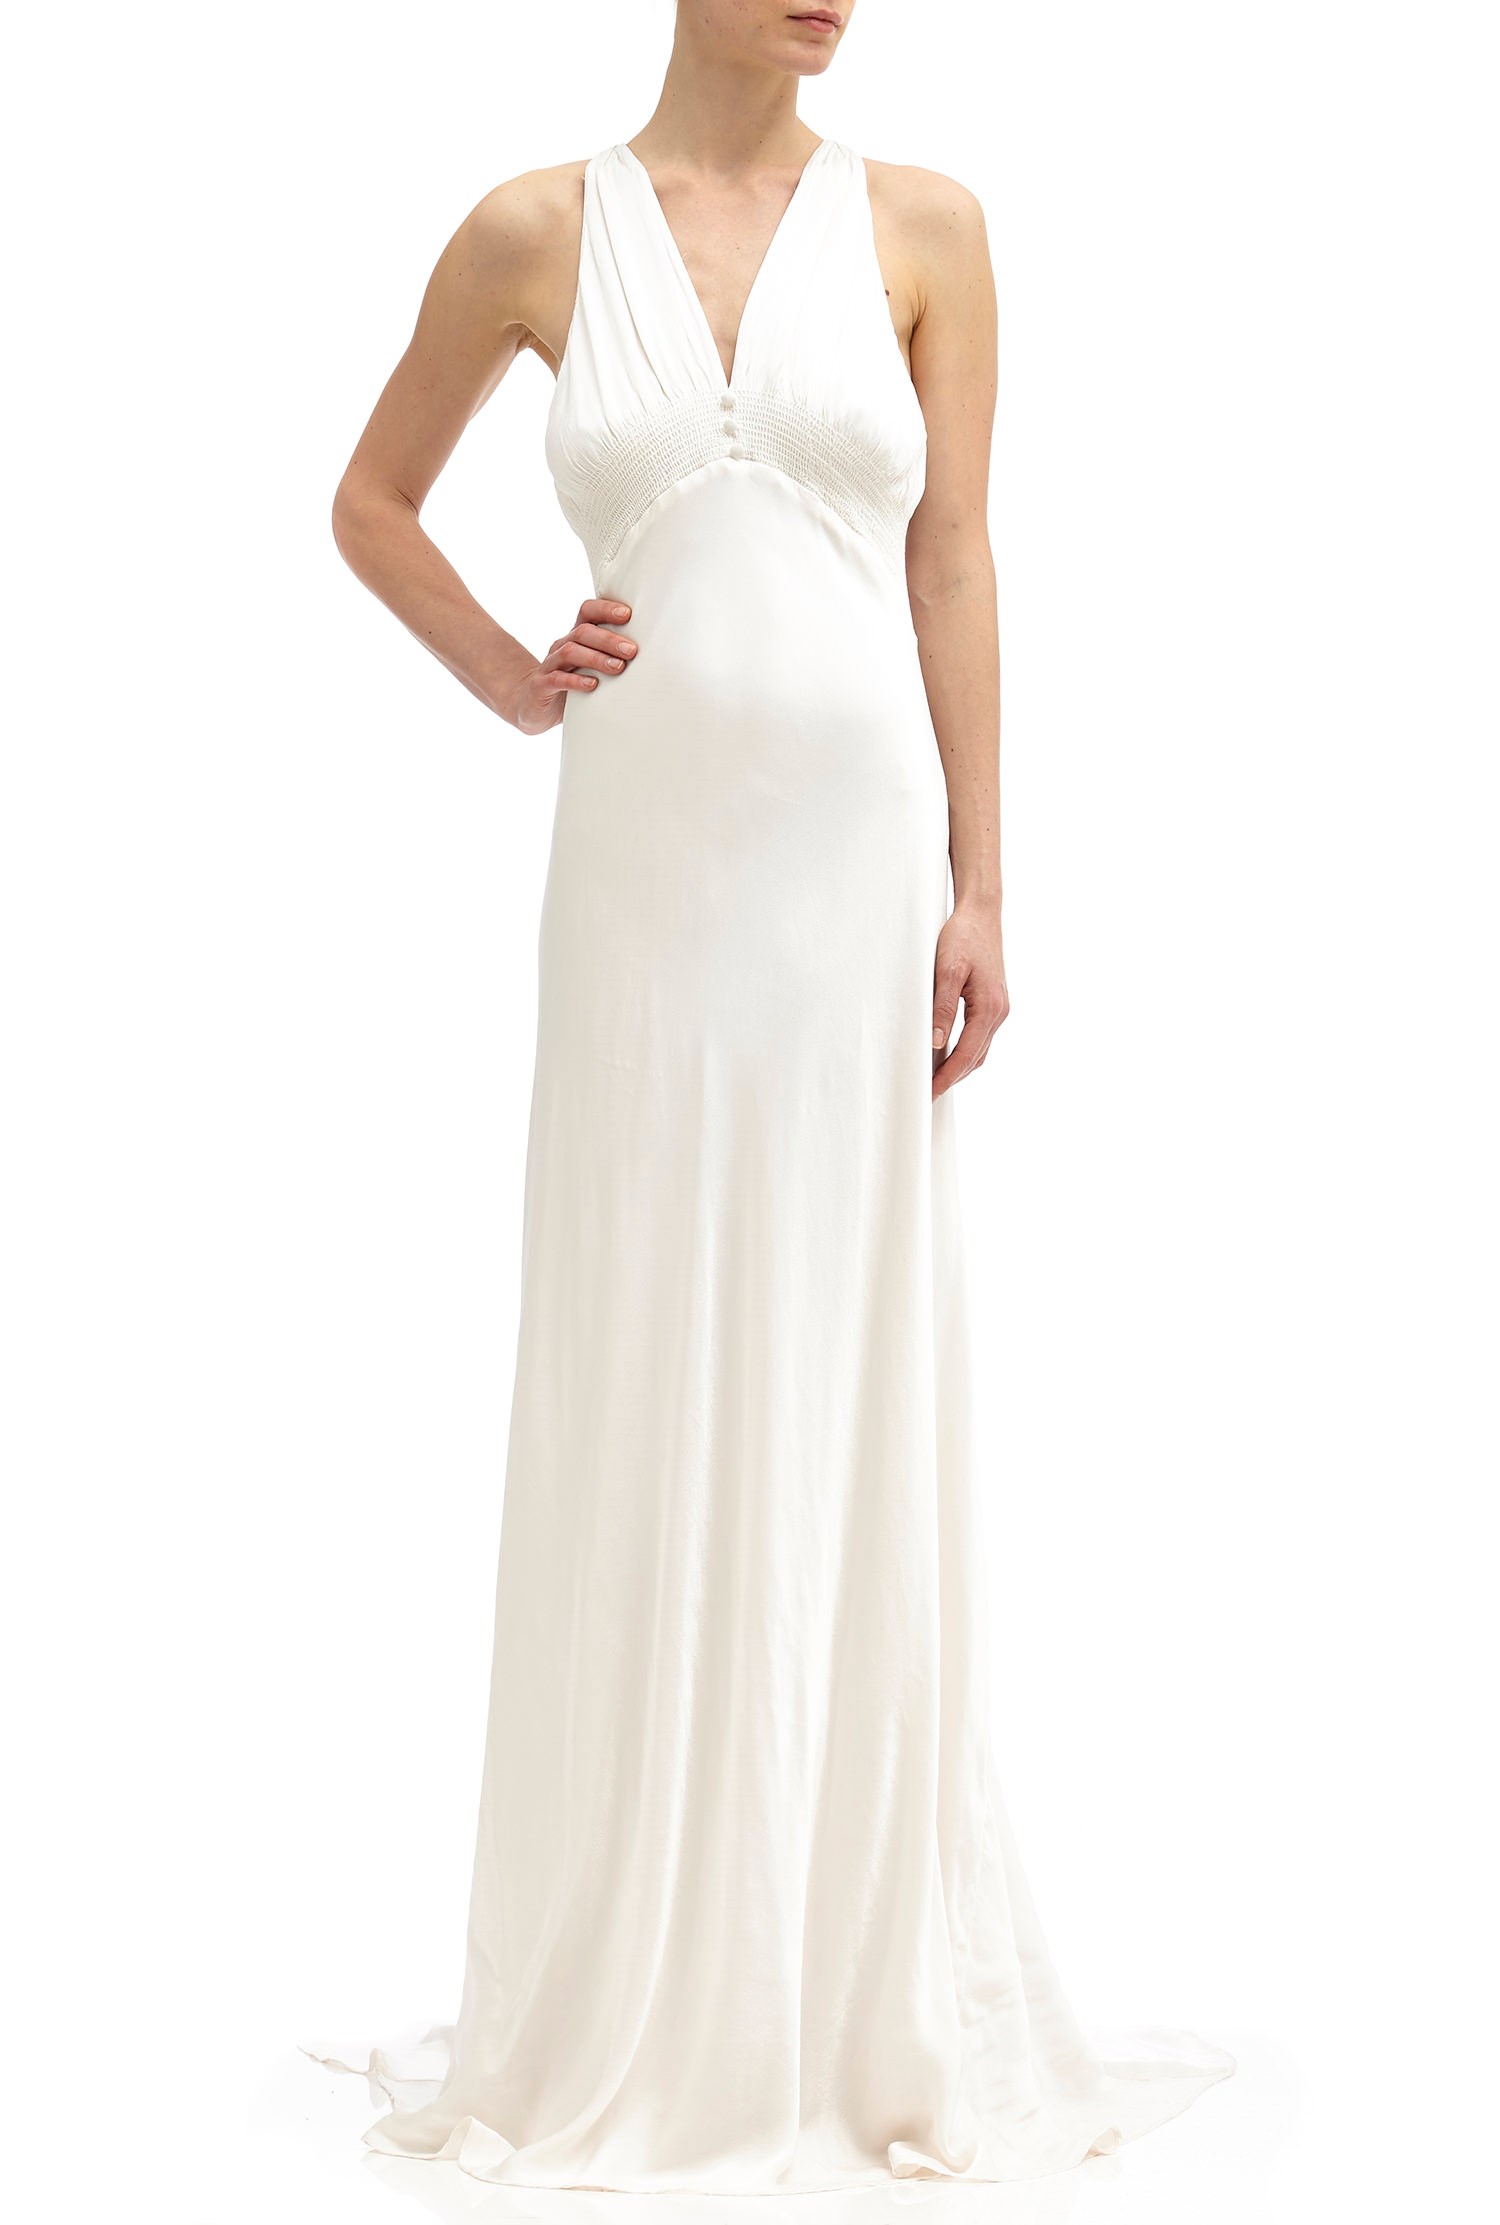 Lilly Wedding Dress Chalk White | Ghost.co.uk